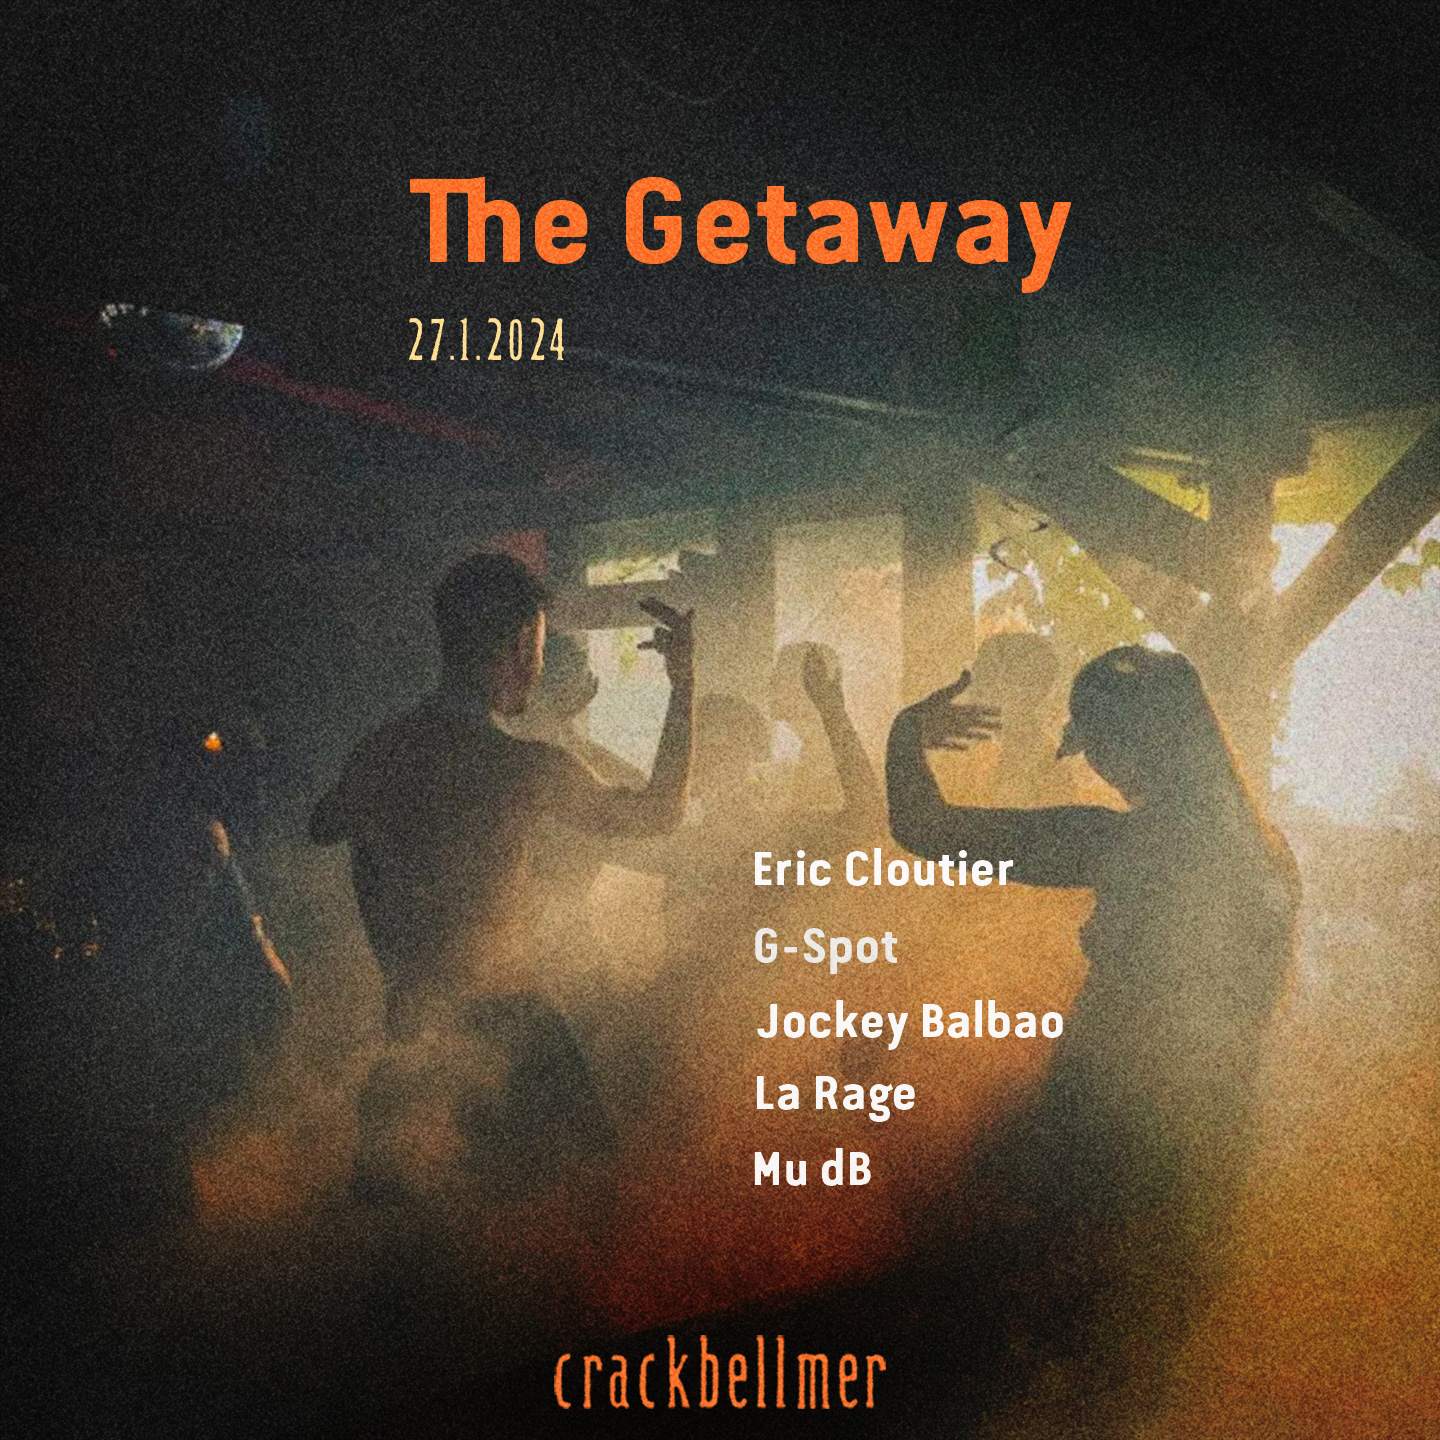 The Getaway with Eric Cloutier, G-Spot, Mu dB, Jockey Balboa, La Rage - Página trasera